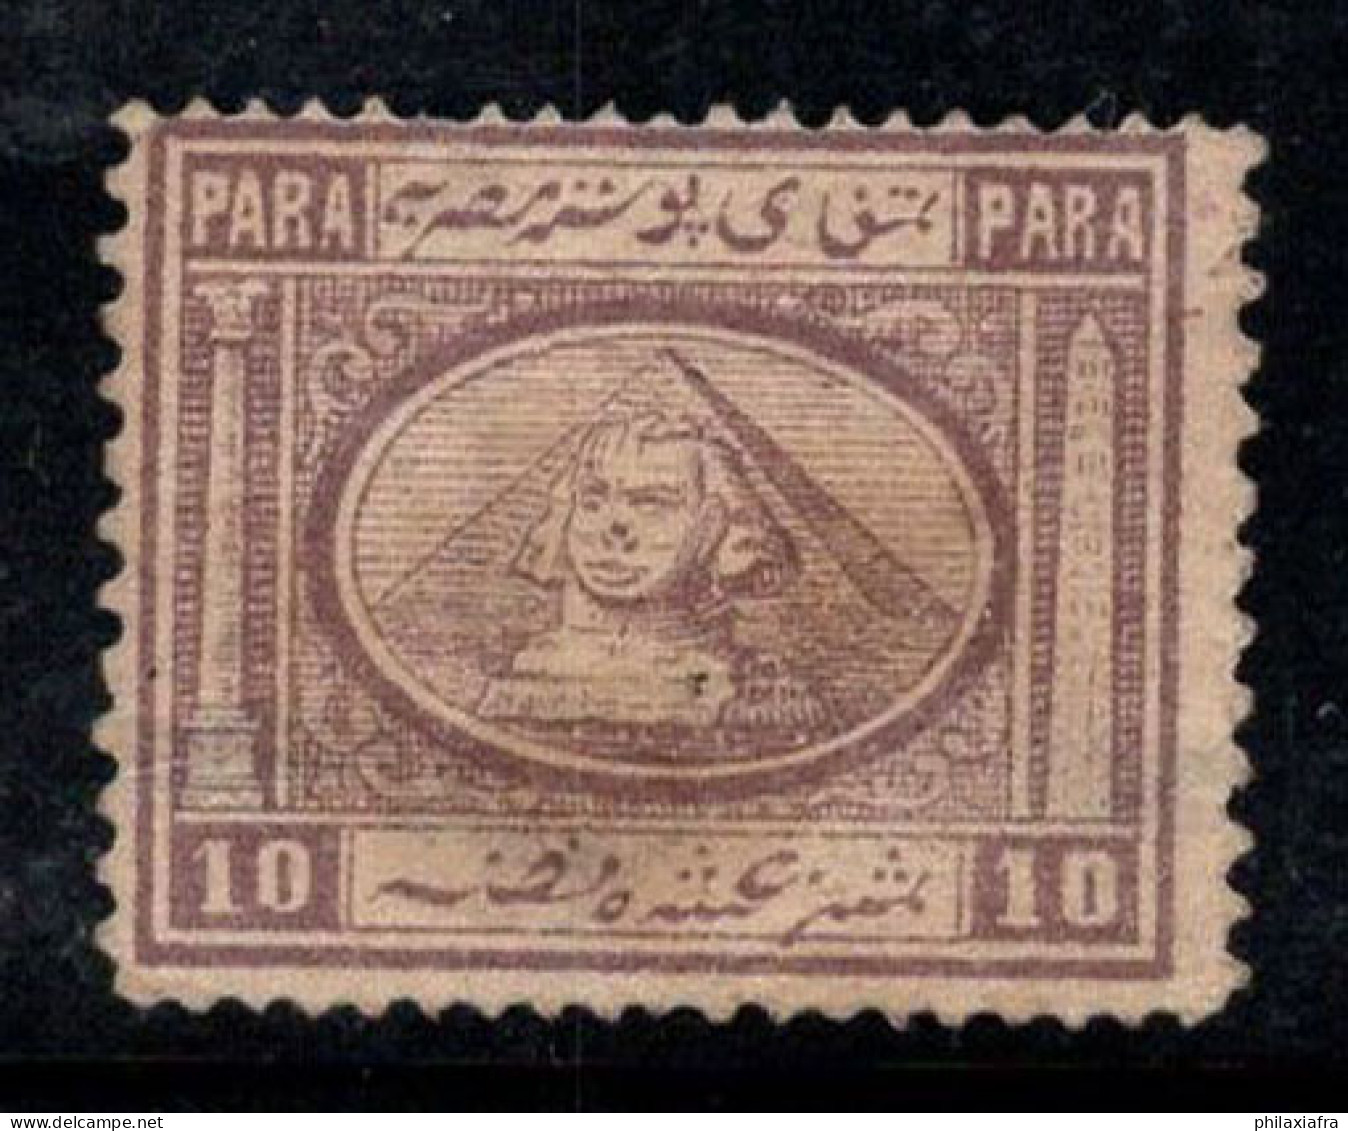 Égypte 1867 Mi. 9 Sans Gomme 20% Sphinx, Pyramide De Khéphren 10 Pa - 1866-1914 Khedivate Of Egypt